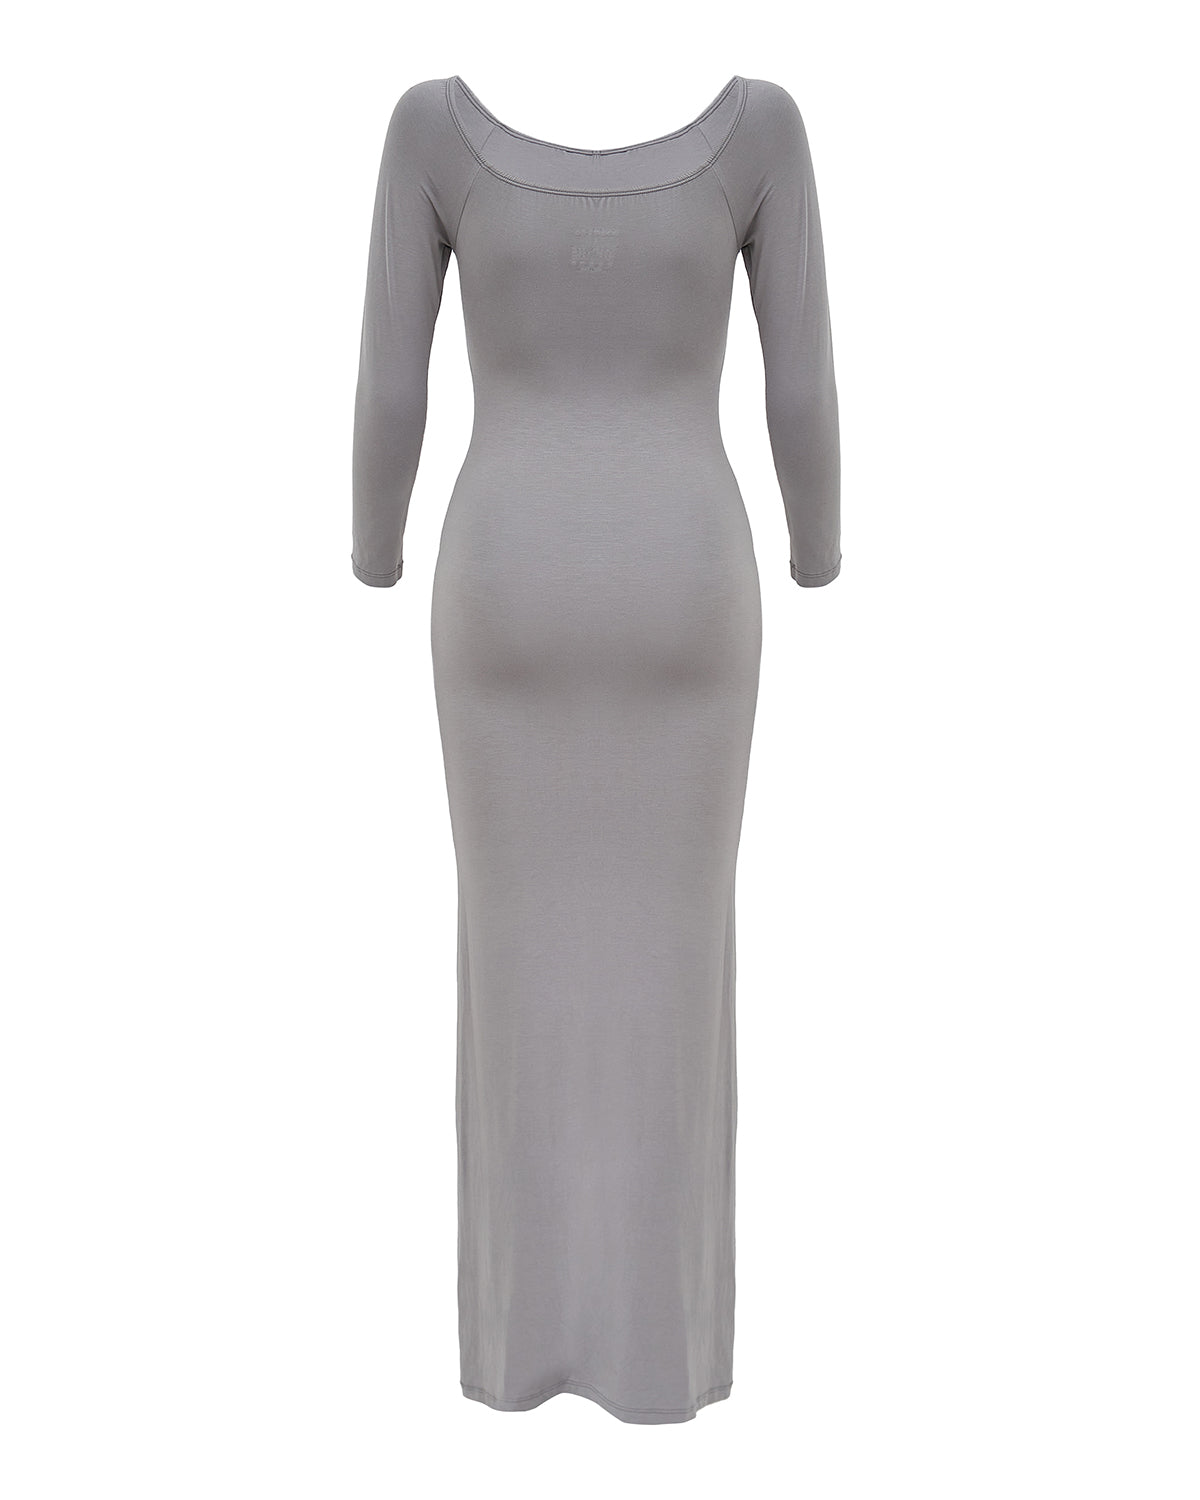 Basic Off Shoulder Maxi Dress in Stone Grey